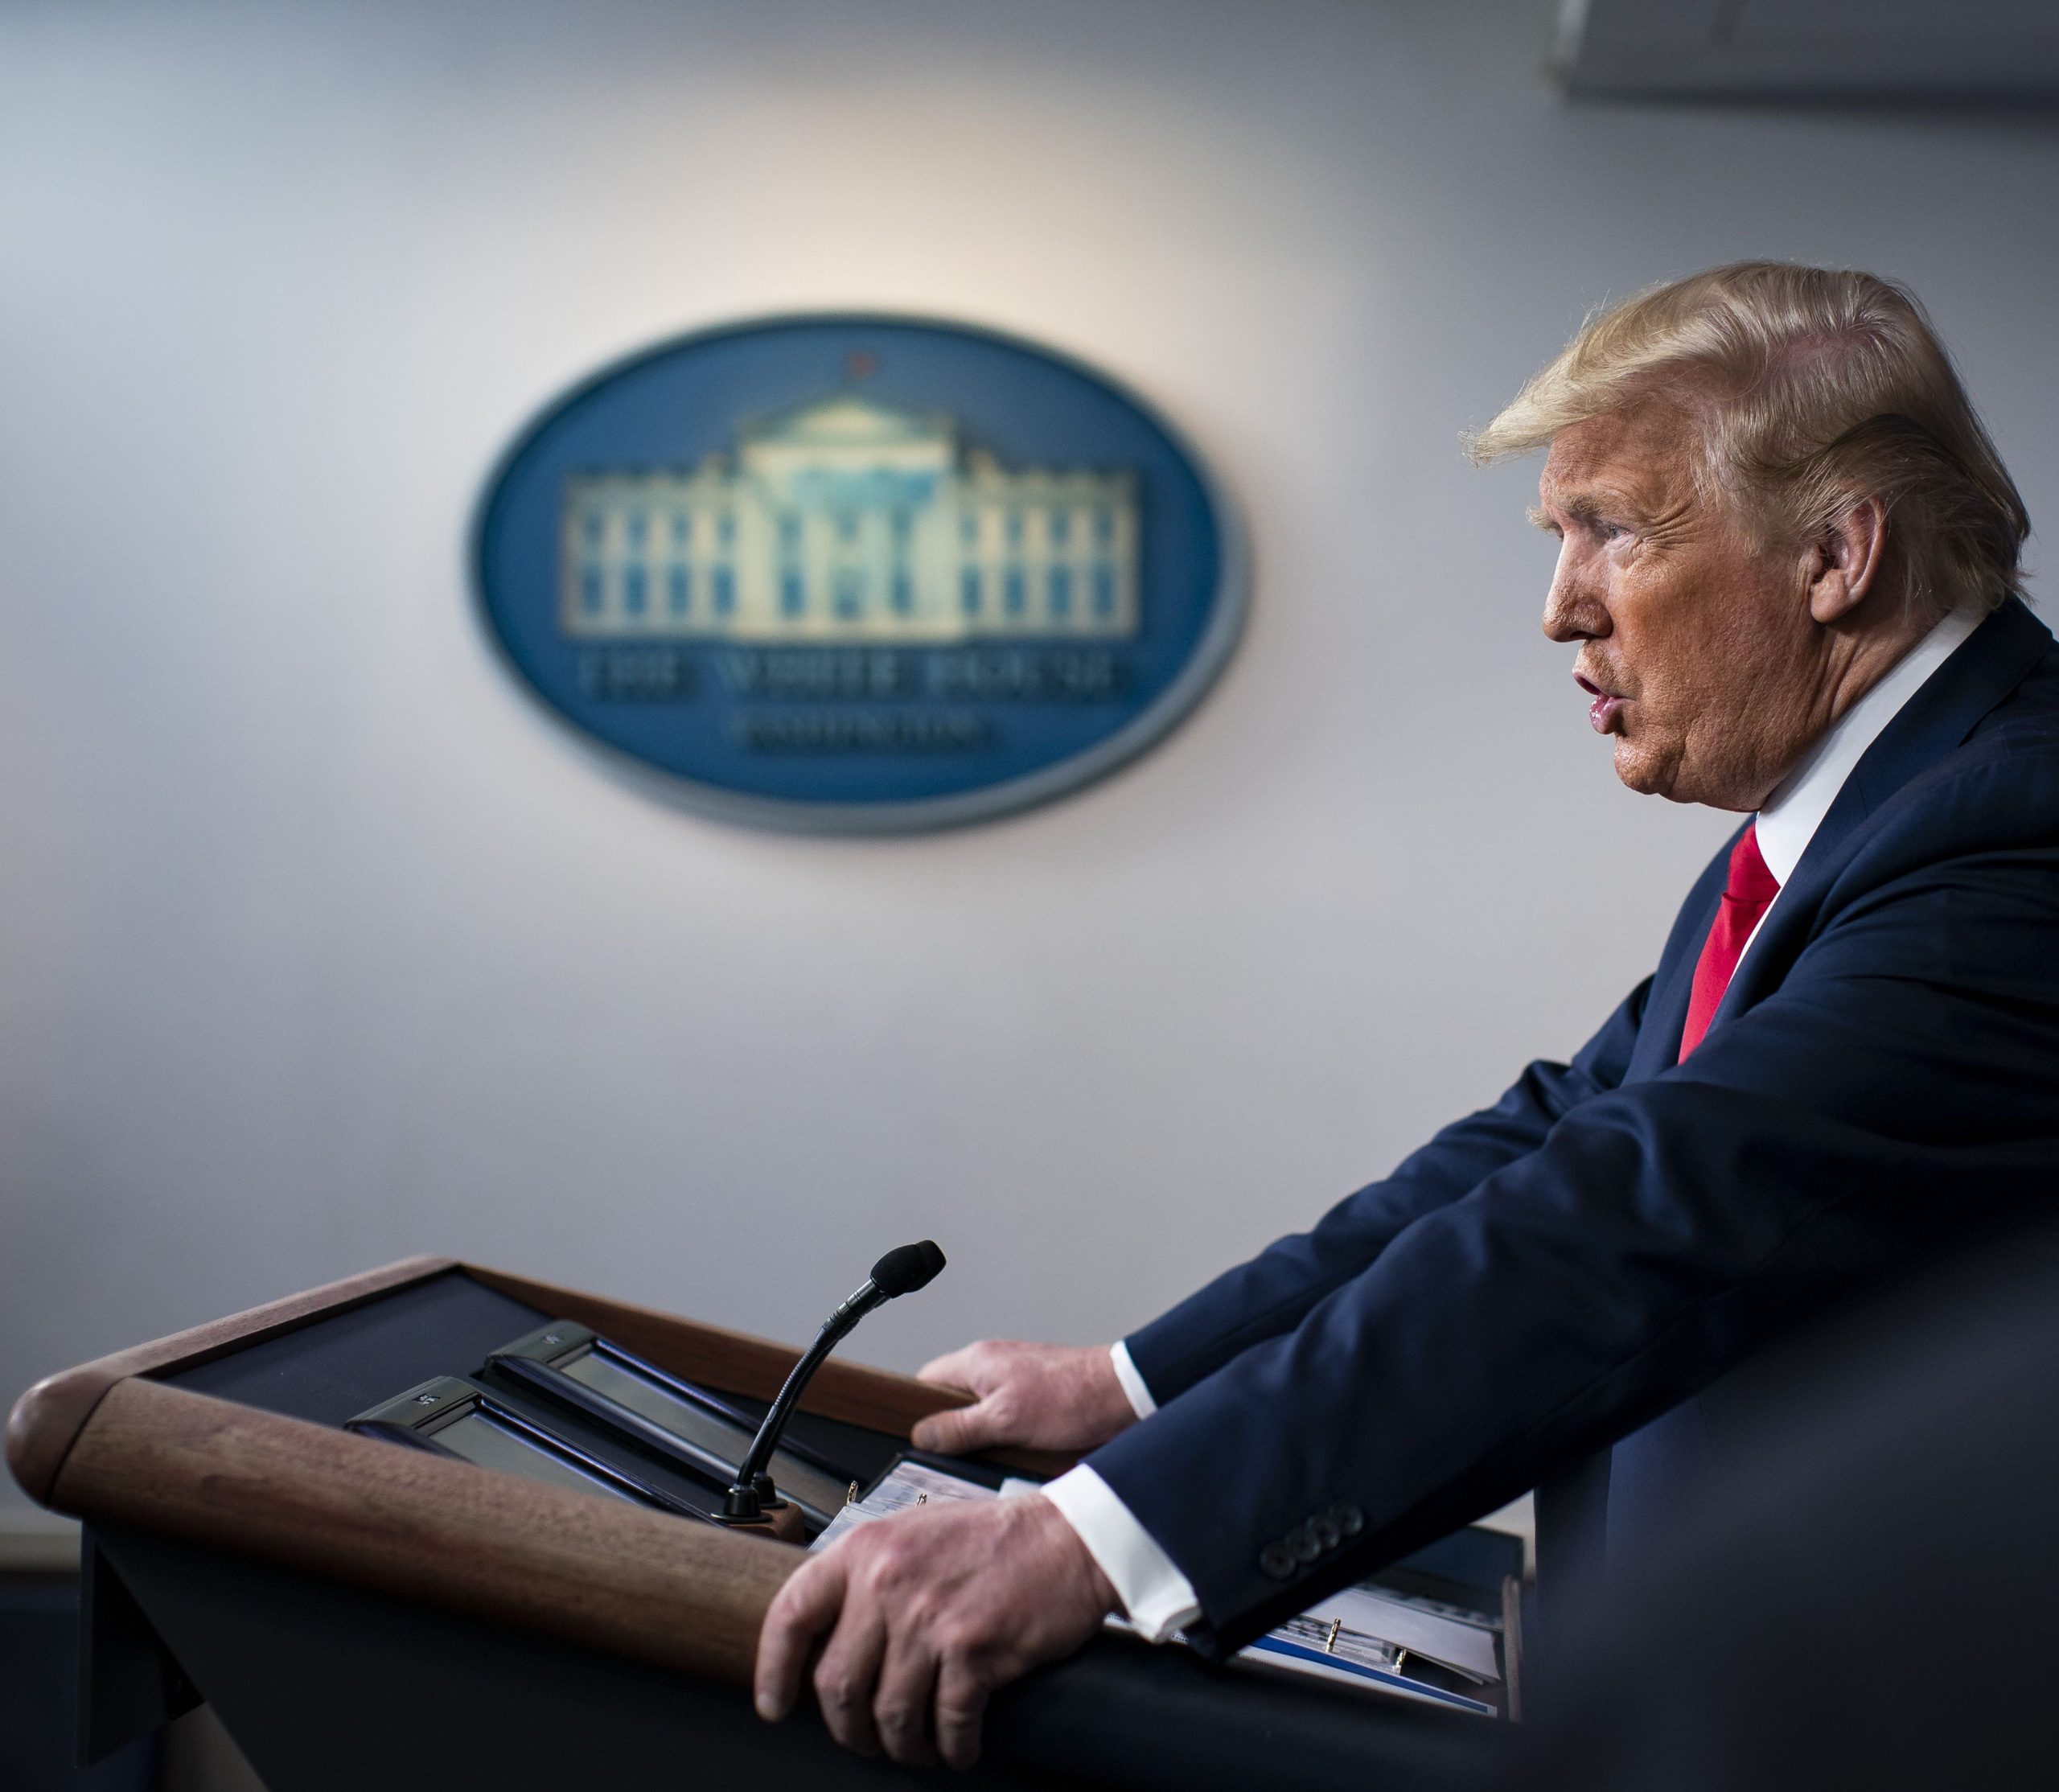 Presidents in health crises: Trump more hands